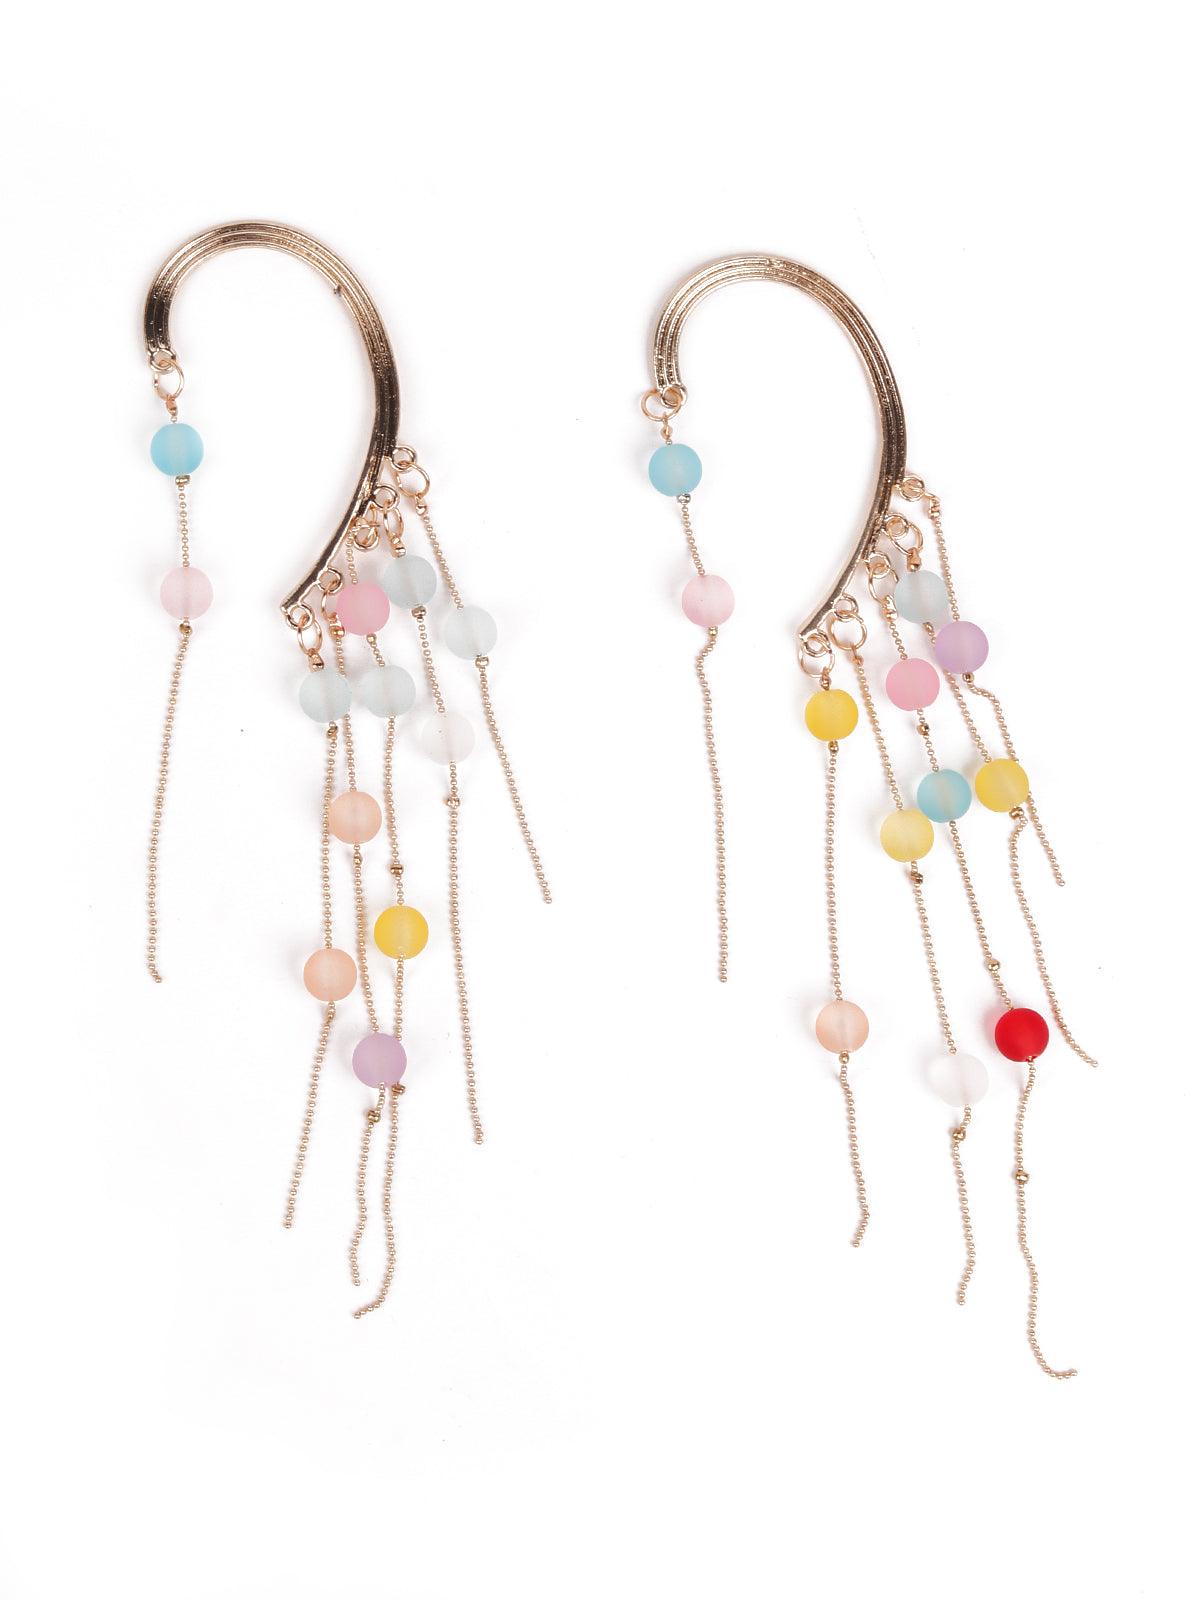 Gorgeous gold tone rainbow earcuff statement earrings - Odette